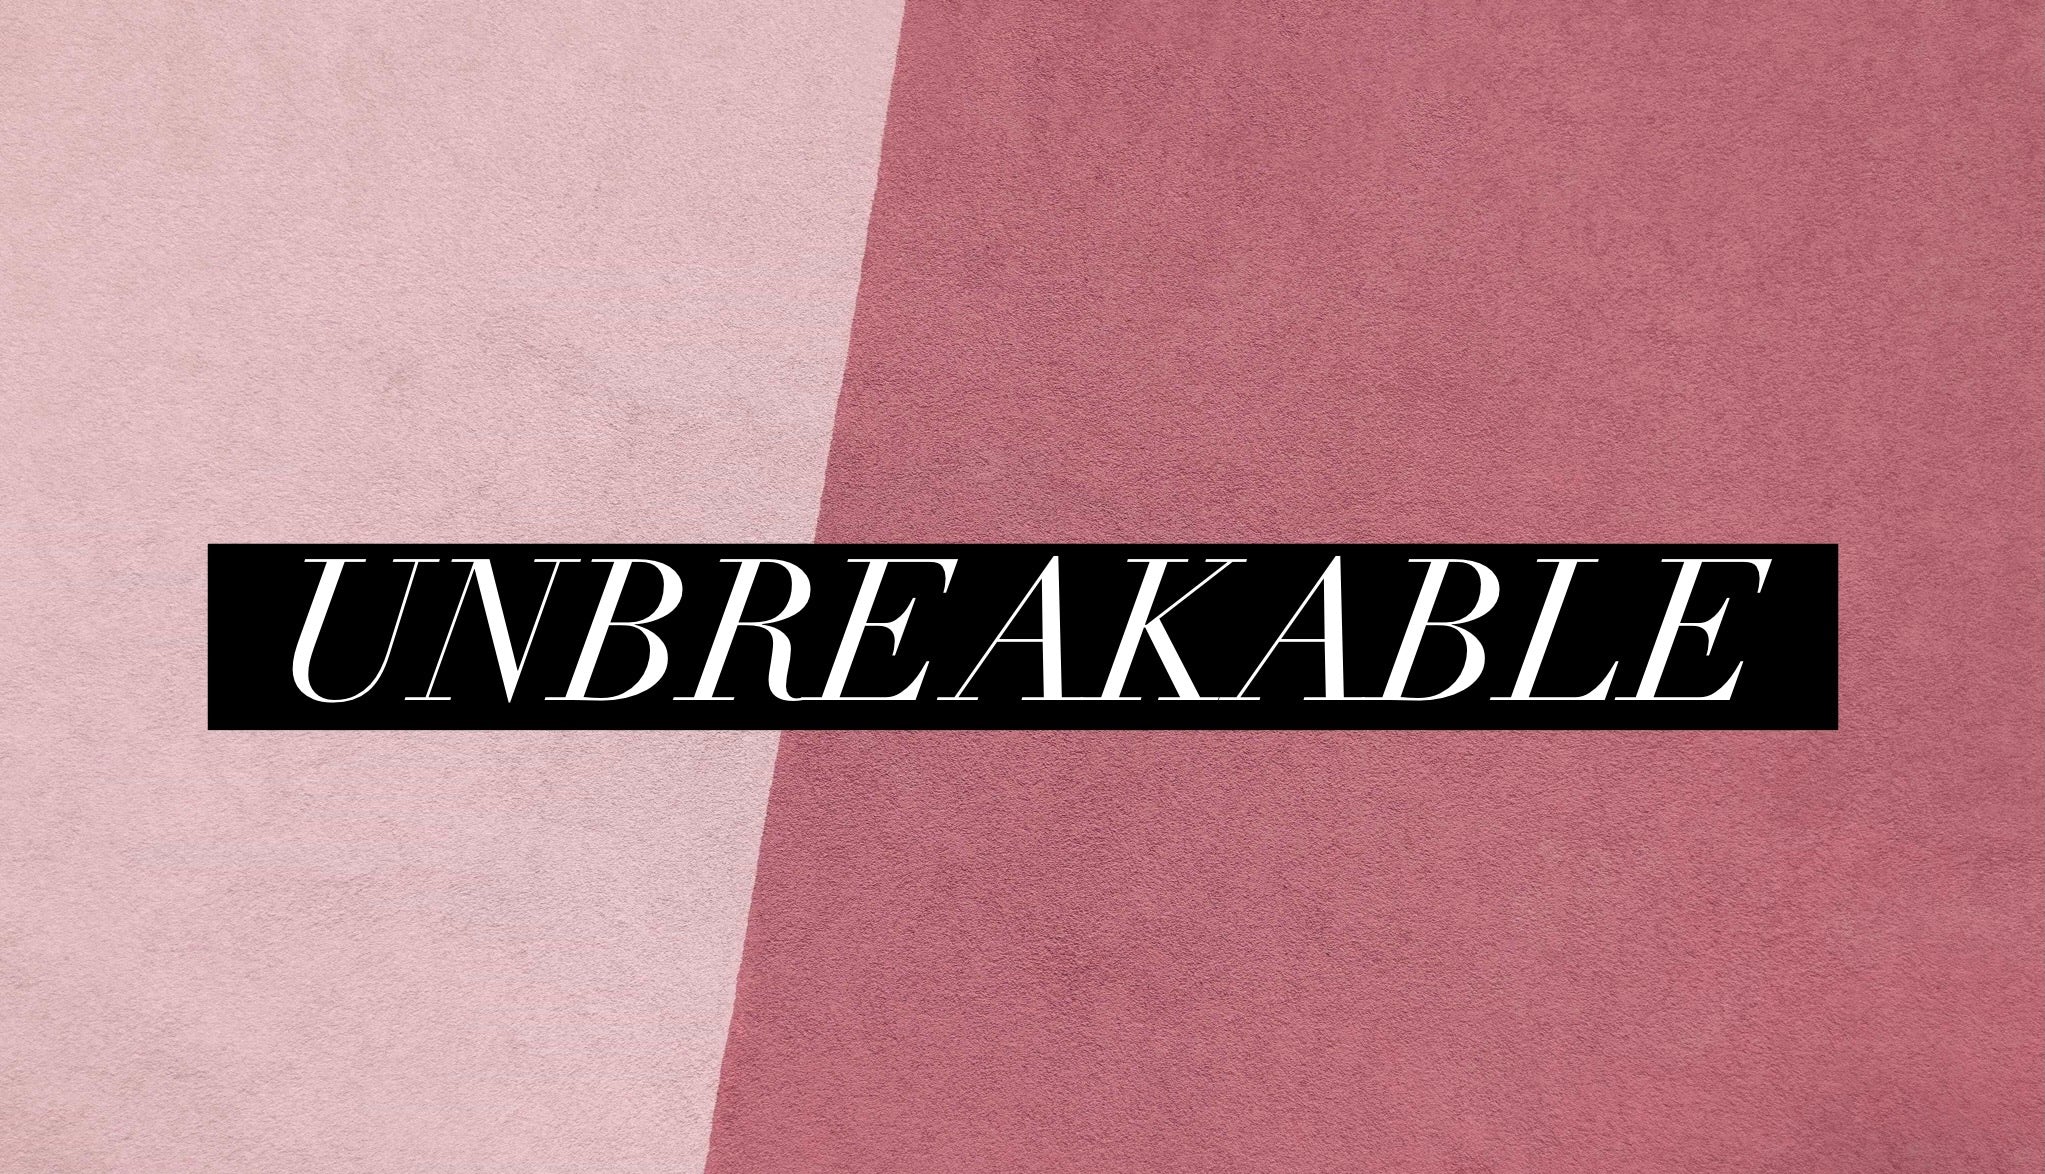 Unbreakable (Special Order)